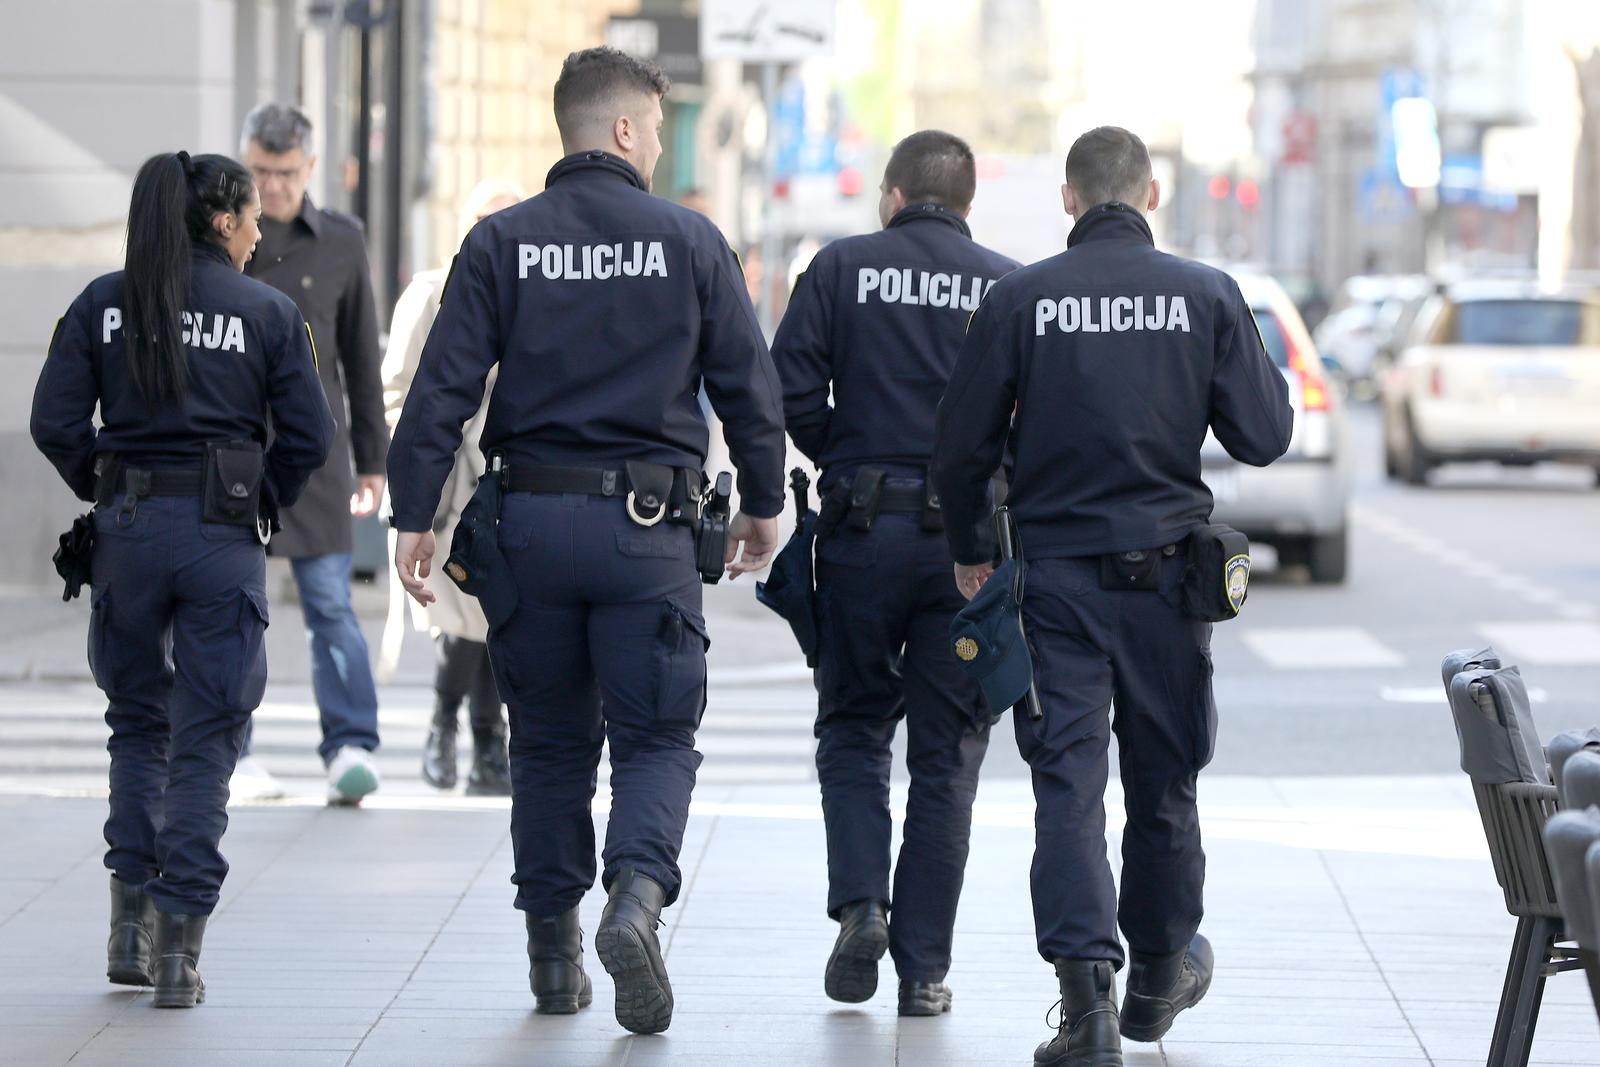 13.04.2022., Zagreb - Policajci u ophodnji. Photo: Patrik Macek/PIXSELL